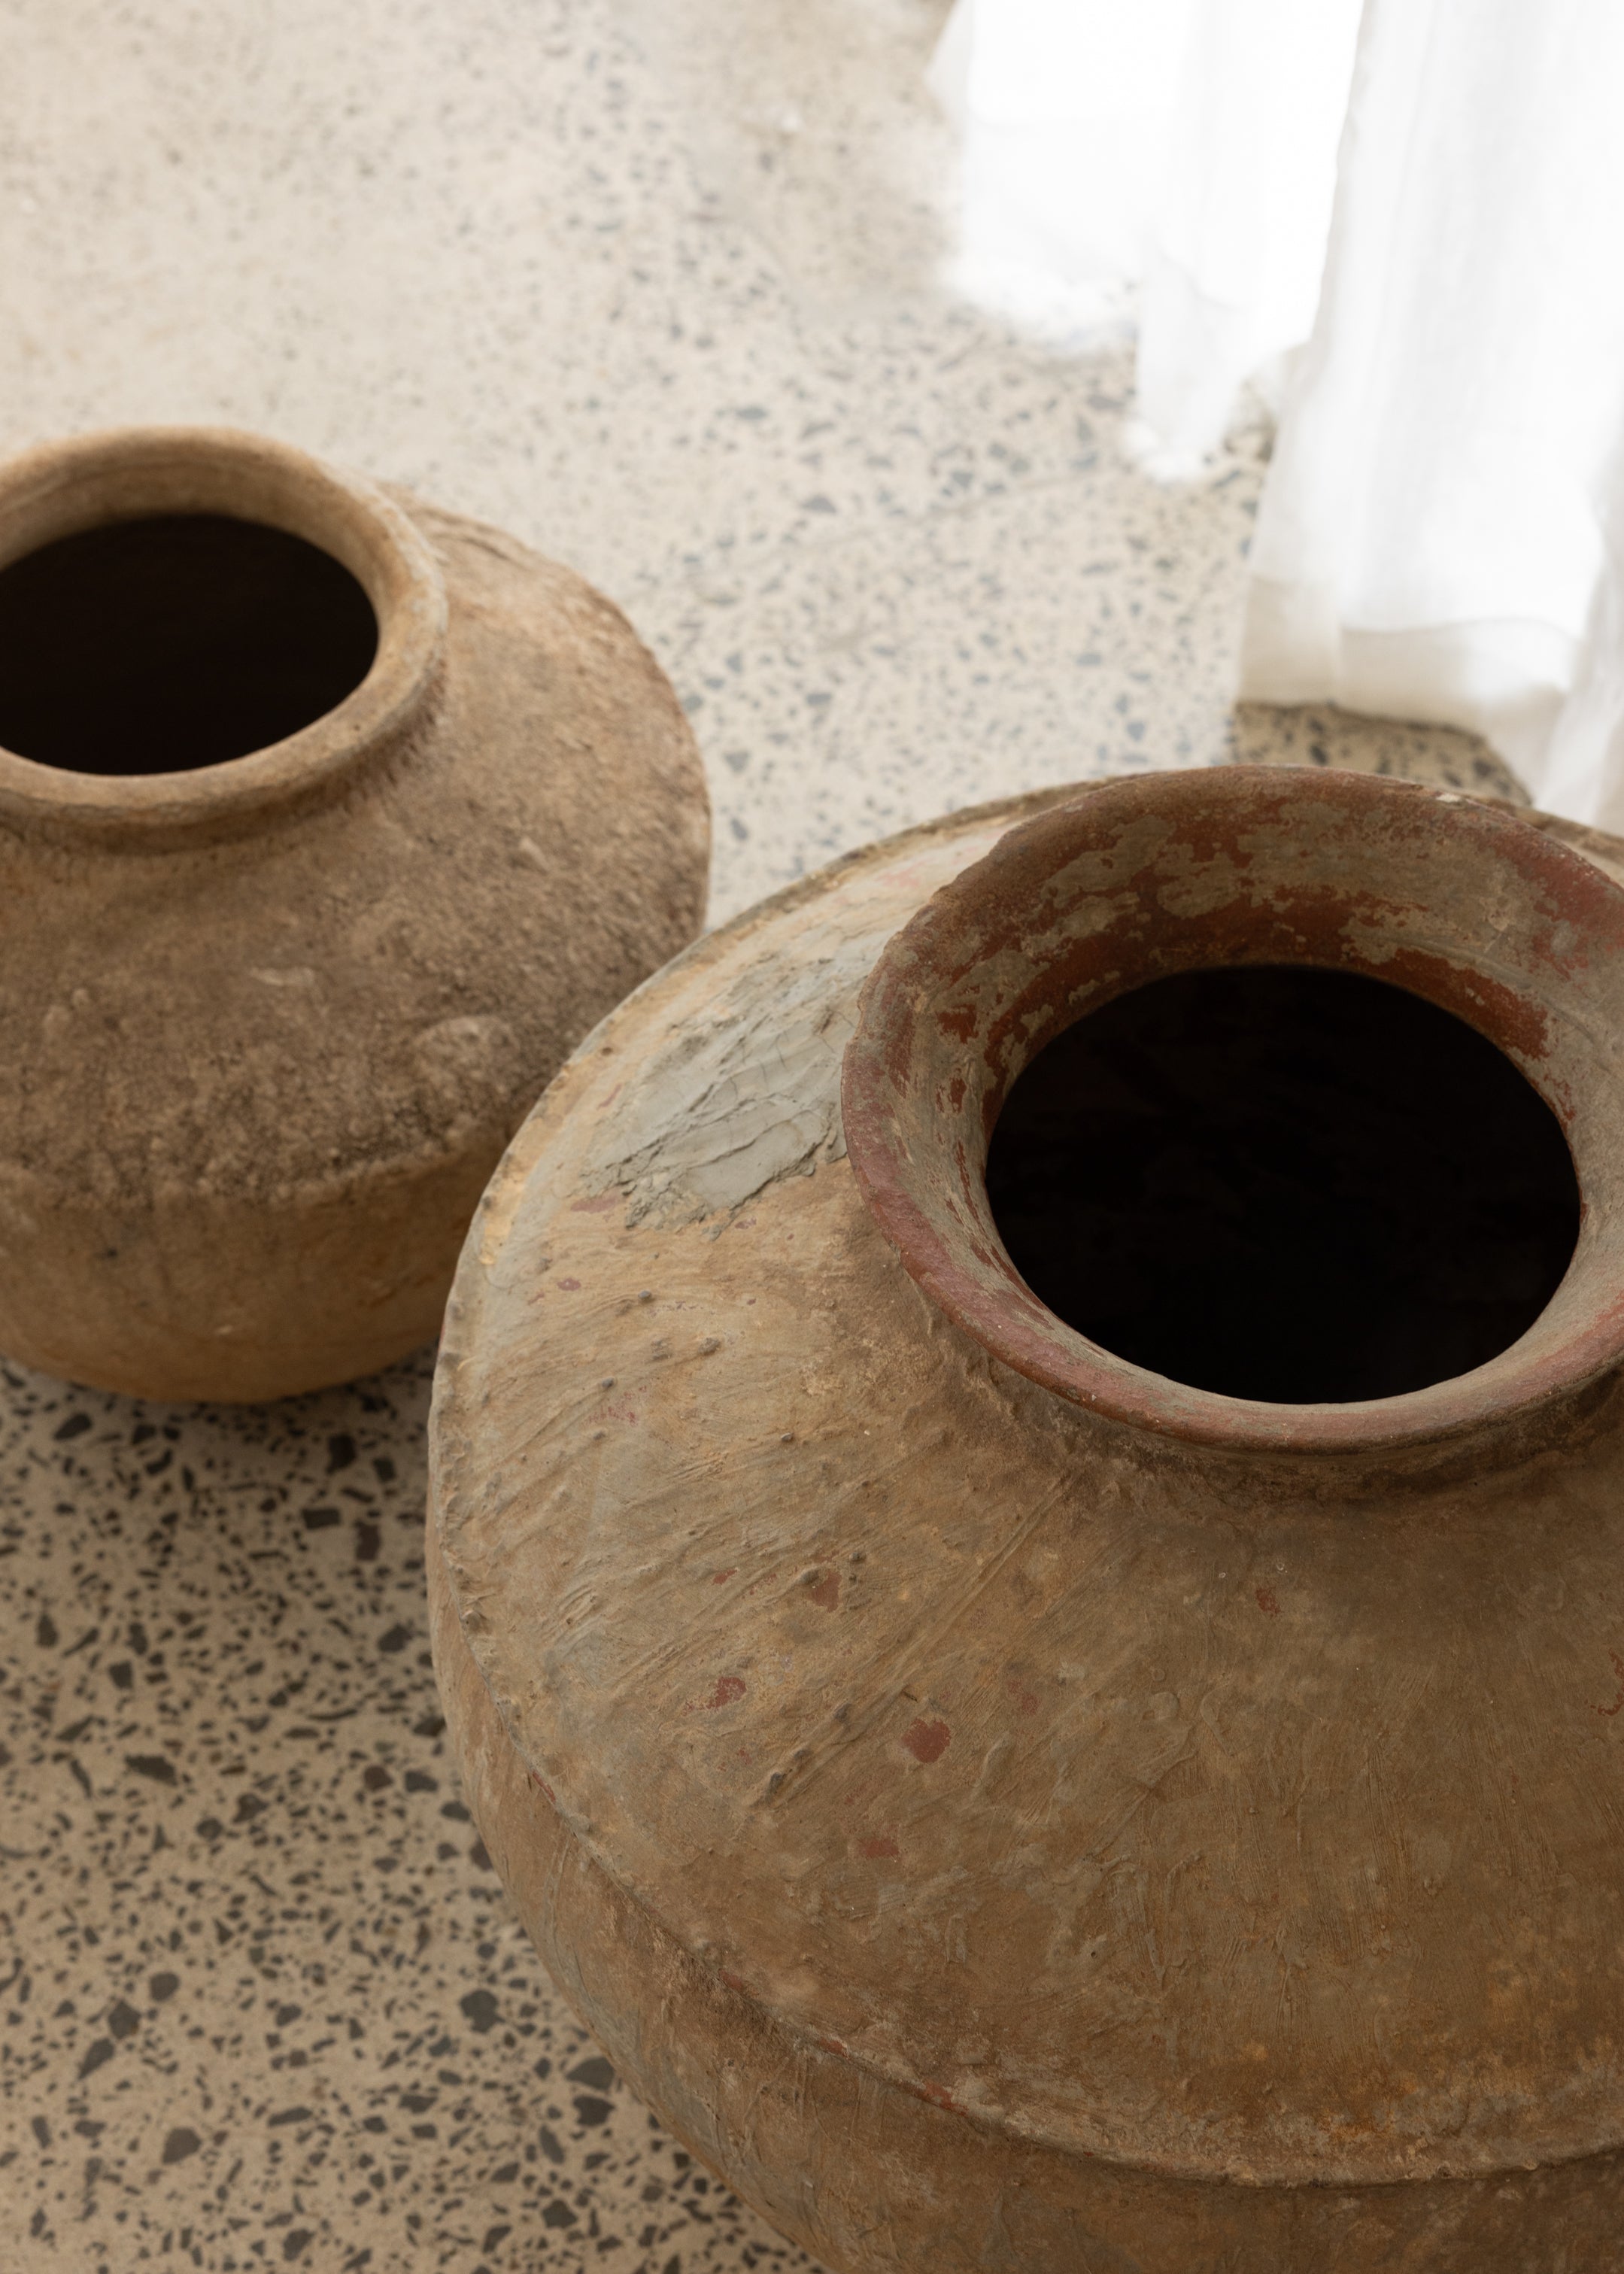 Antique Terracotta Water Pot / Small